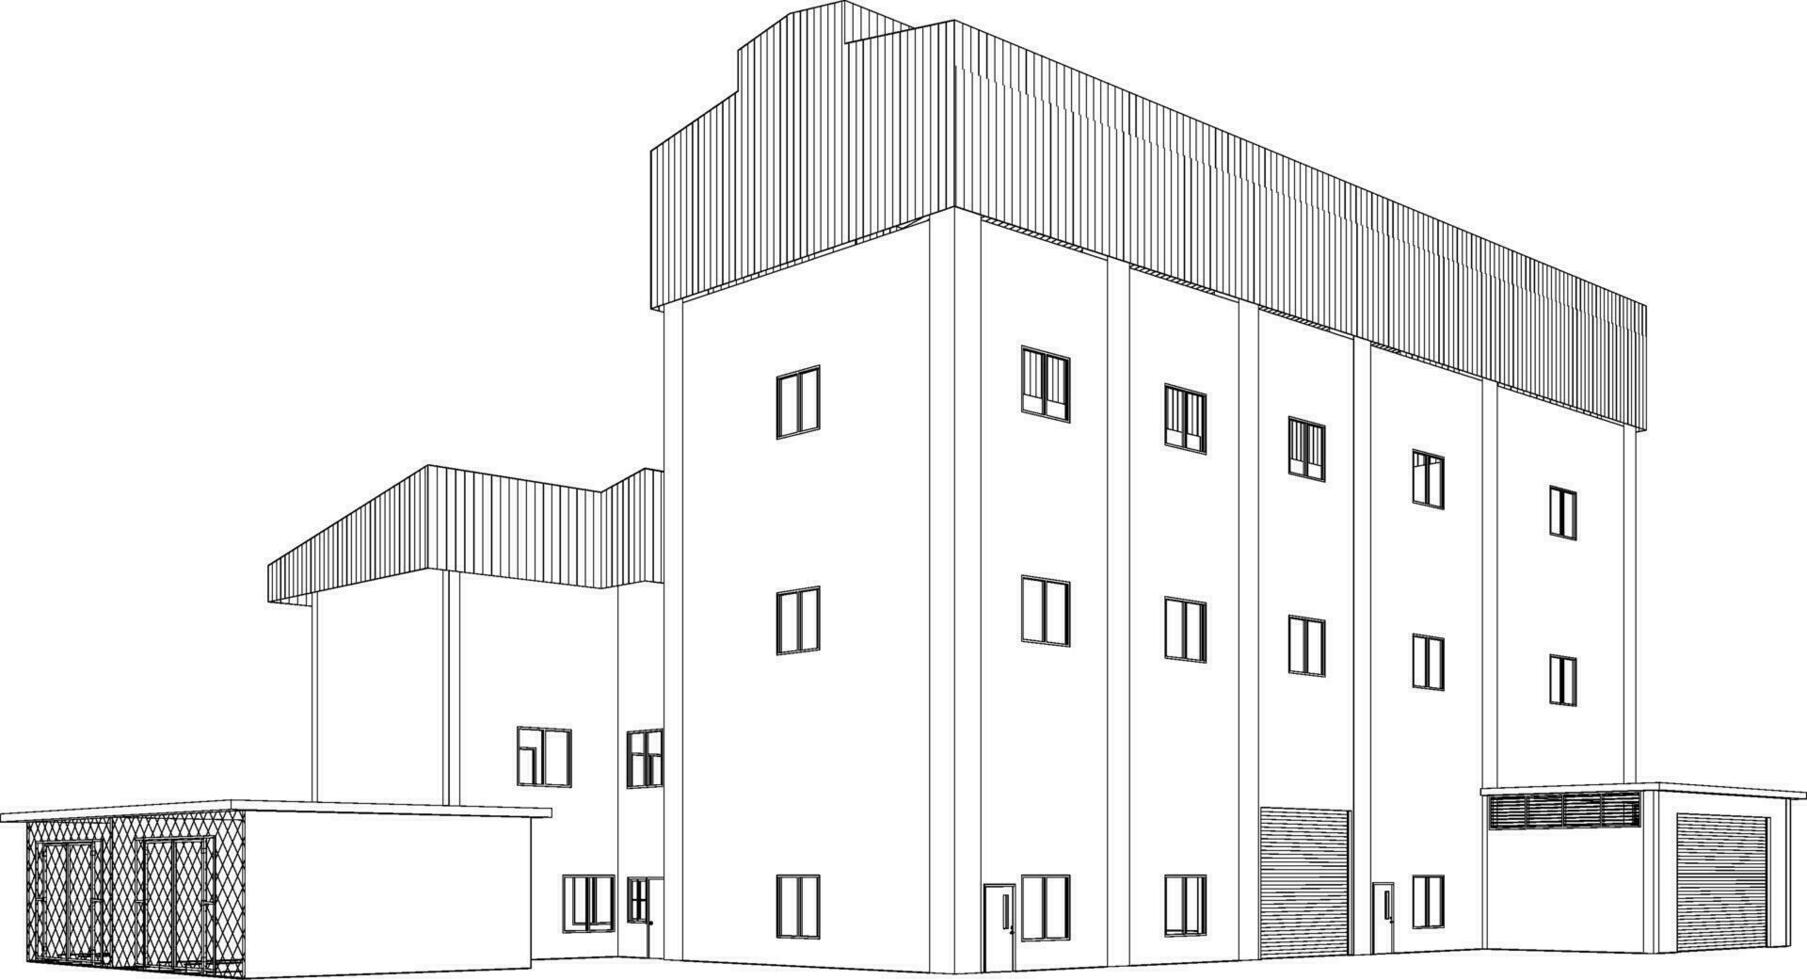 3D illustration of industrial building vector